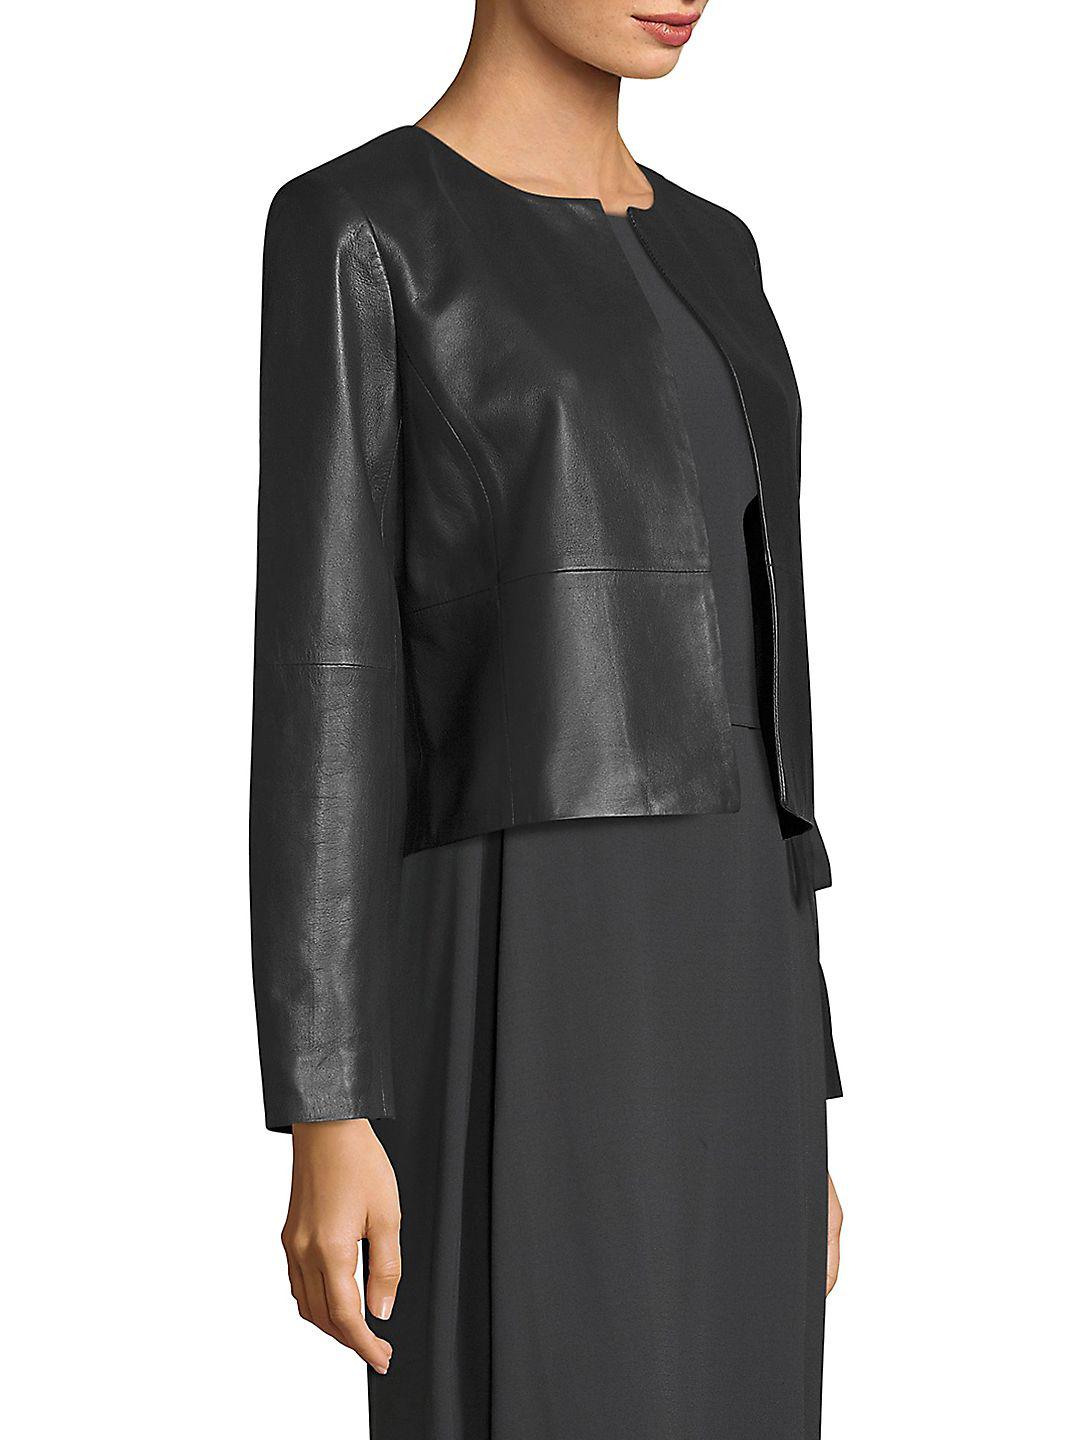 Eileen Fisher Bolero Leather Jacket in Graphite (Black) | Lyst